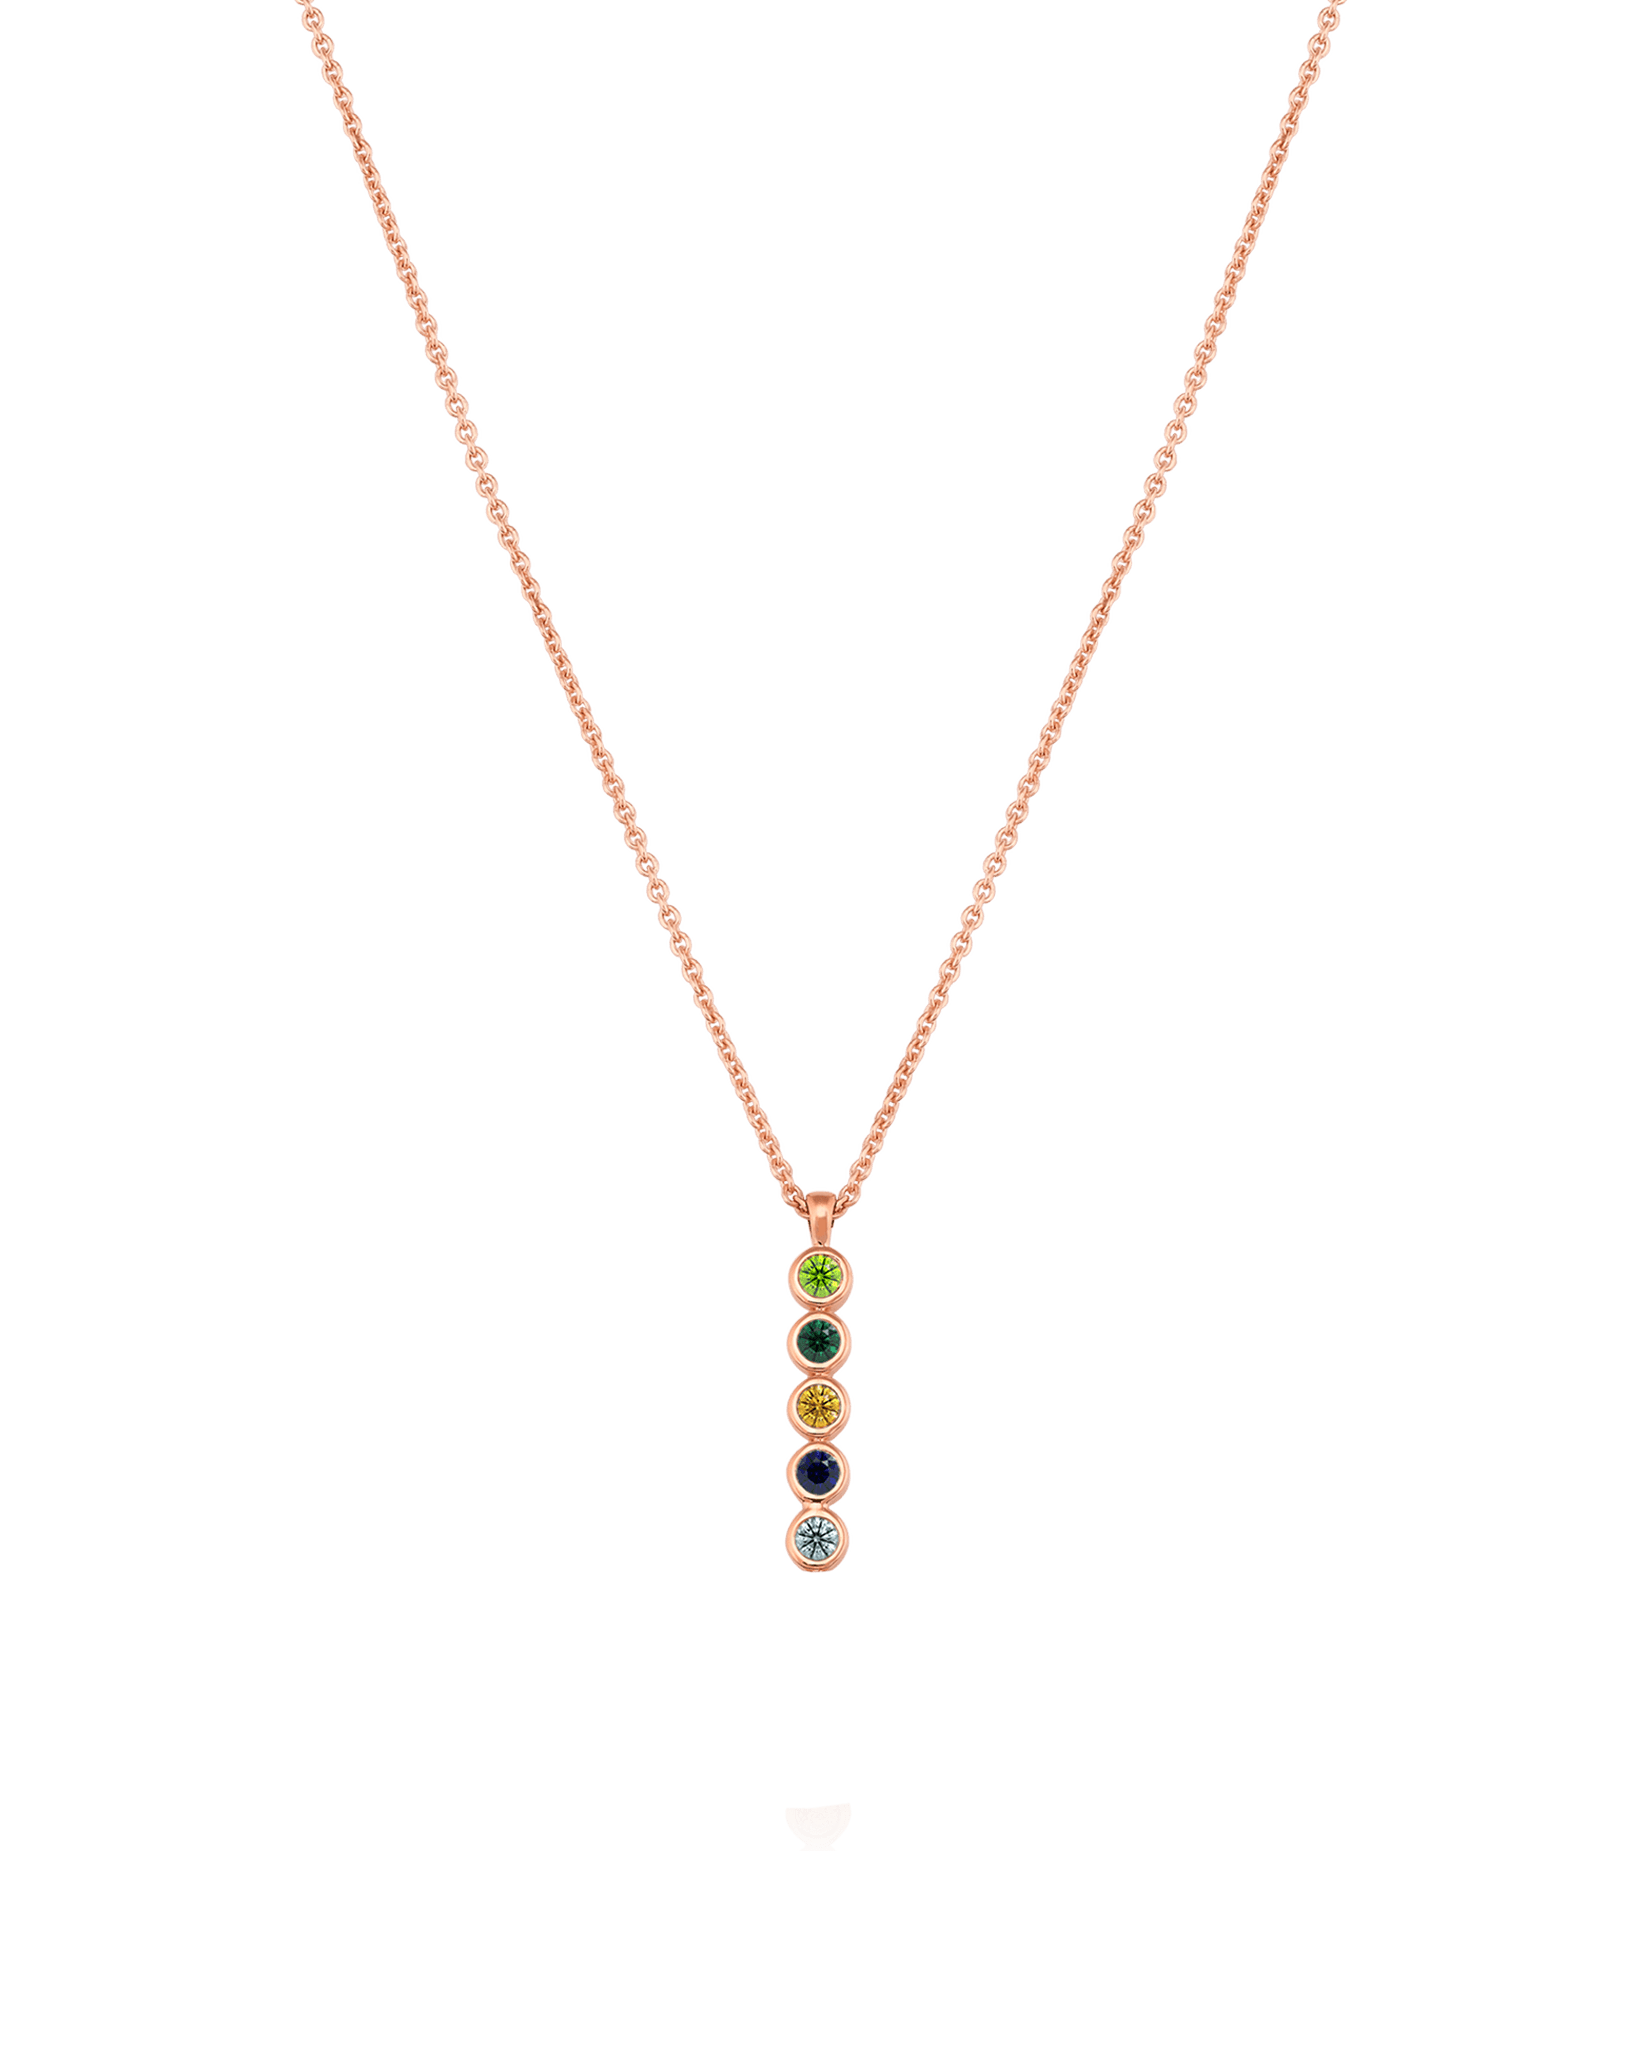 Birthstone Bar Chain Necklace - 18K Gold Vermeil Necklaces Gold Vermeil 